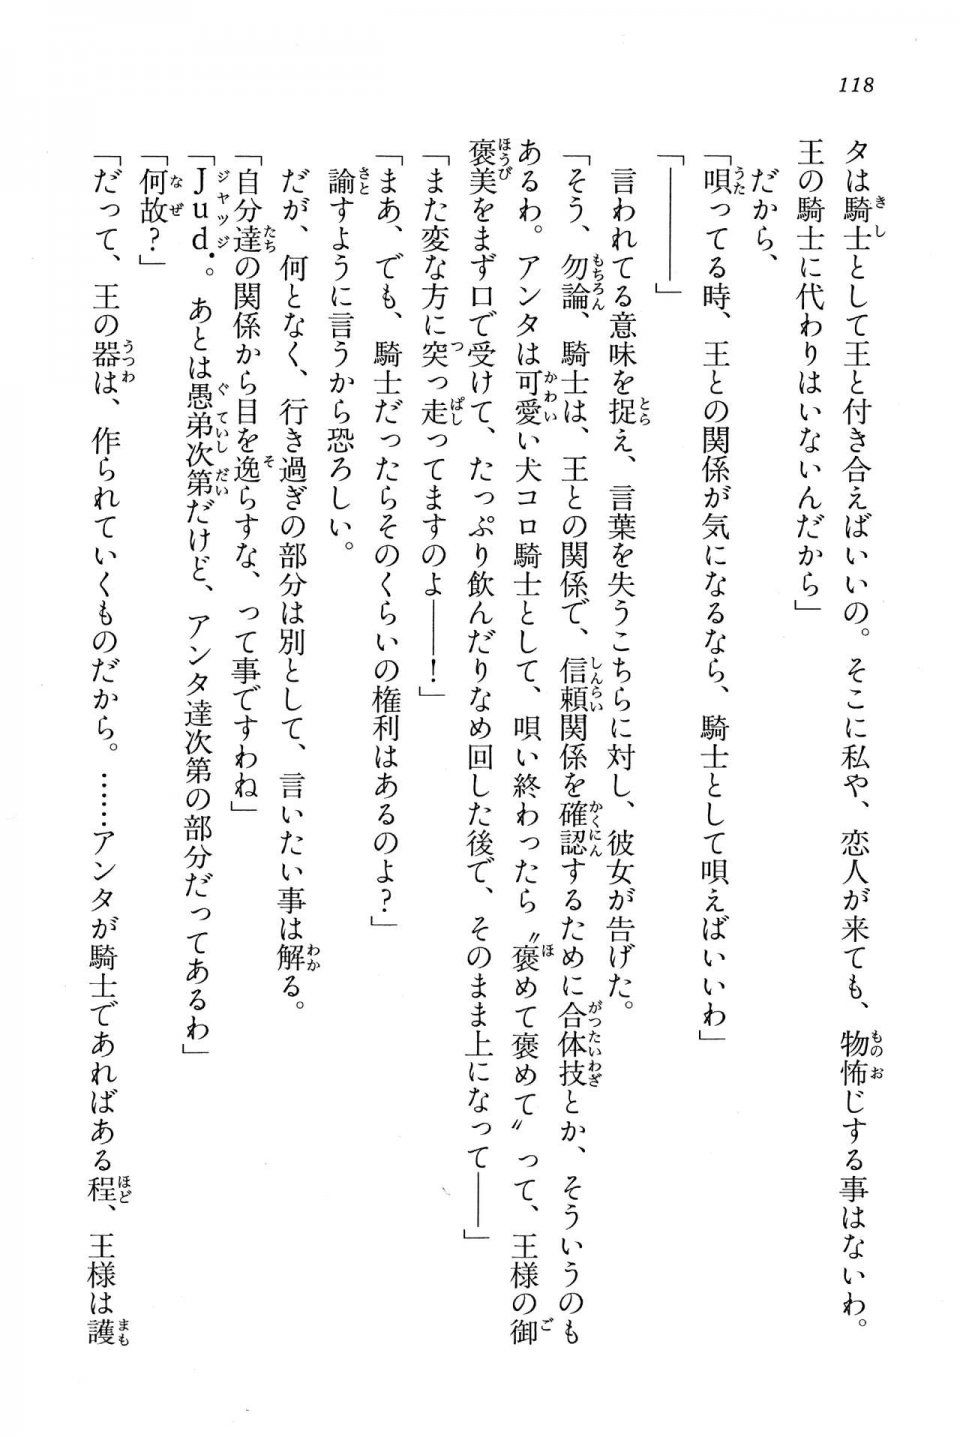 Kyoukai Senjou no Horizon BD Special Mininovel Vol 6(3B) - Photo #122